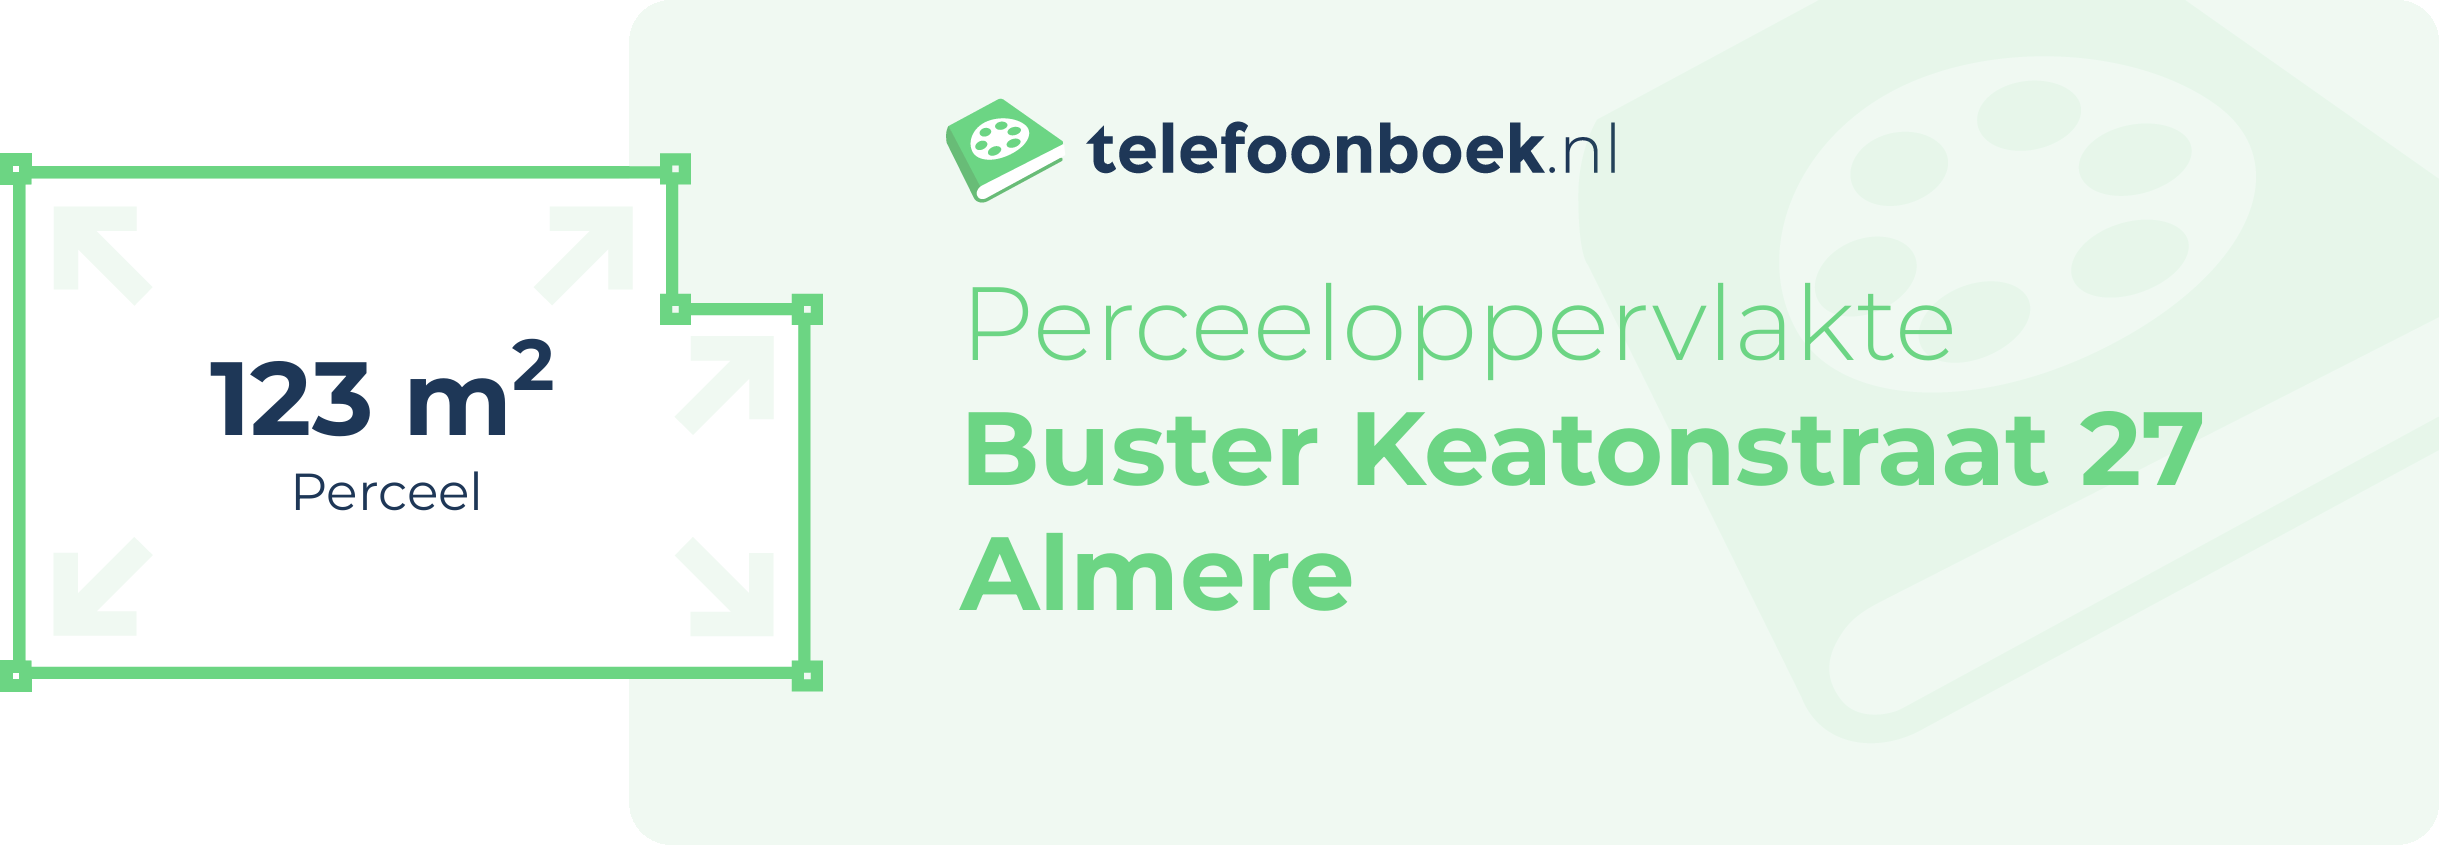 Perceeloppervlakte Buster Keatonstraat 27 Almere